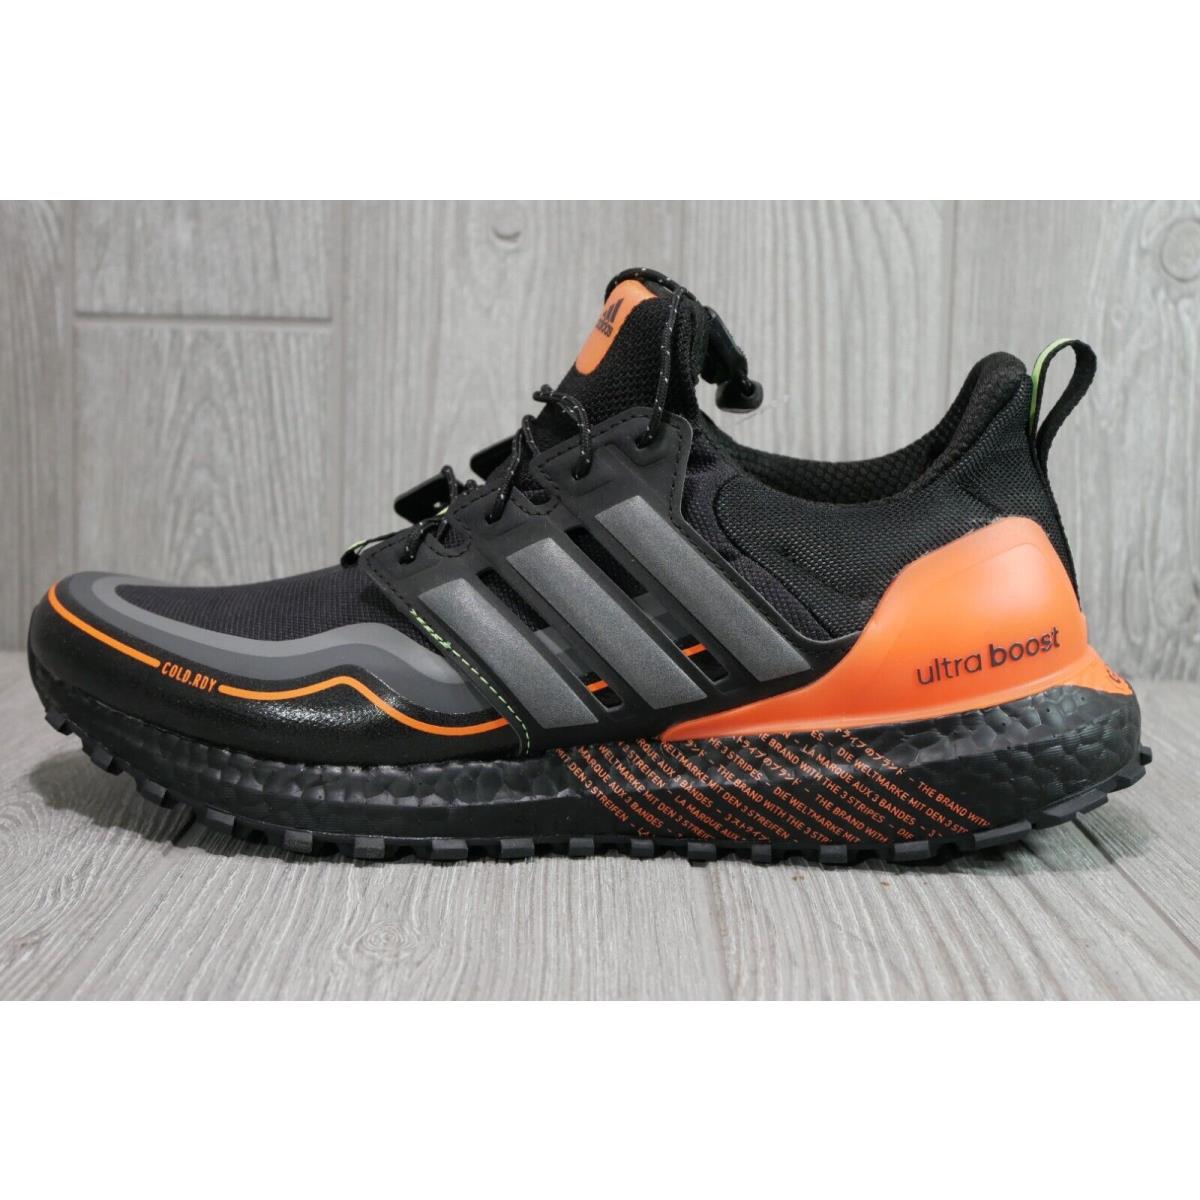 Adidas Ultraboost C.rdy Dna Running Shoes Black Orange G54860 Mens Size 8 8.5